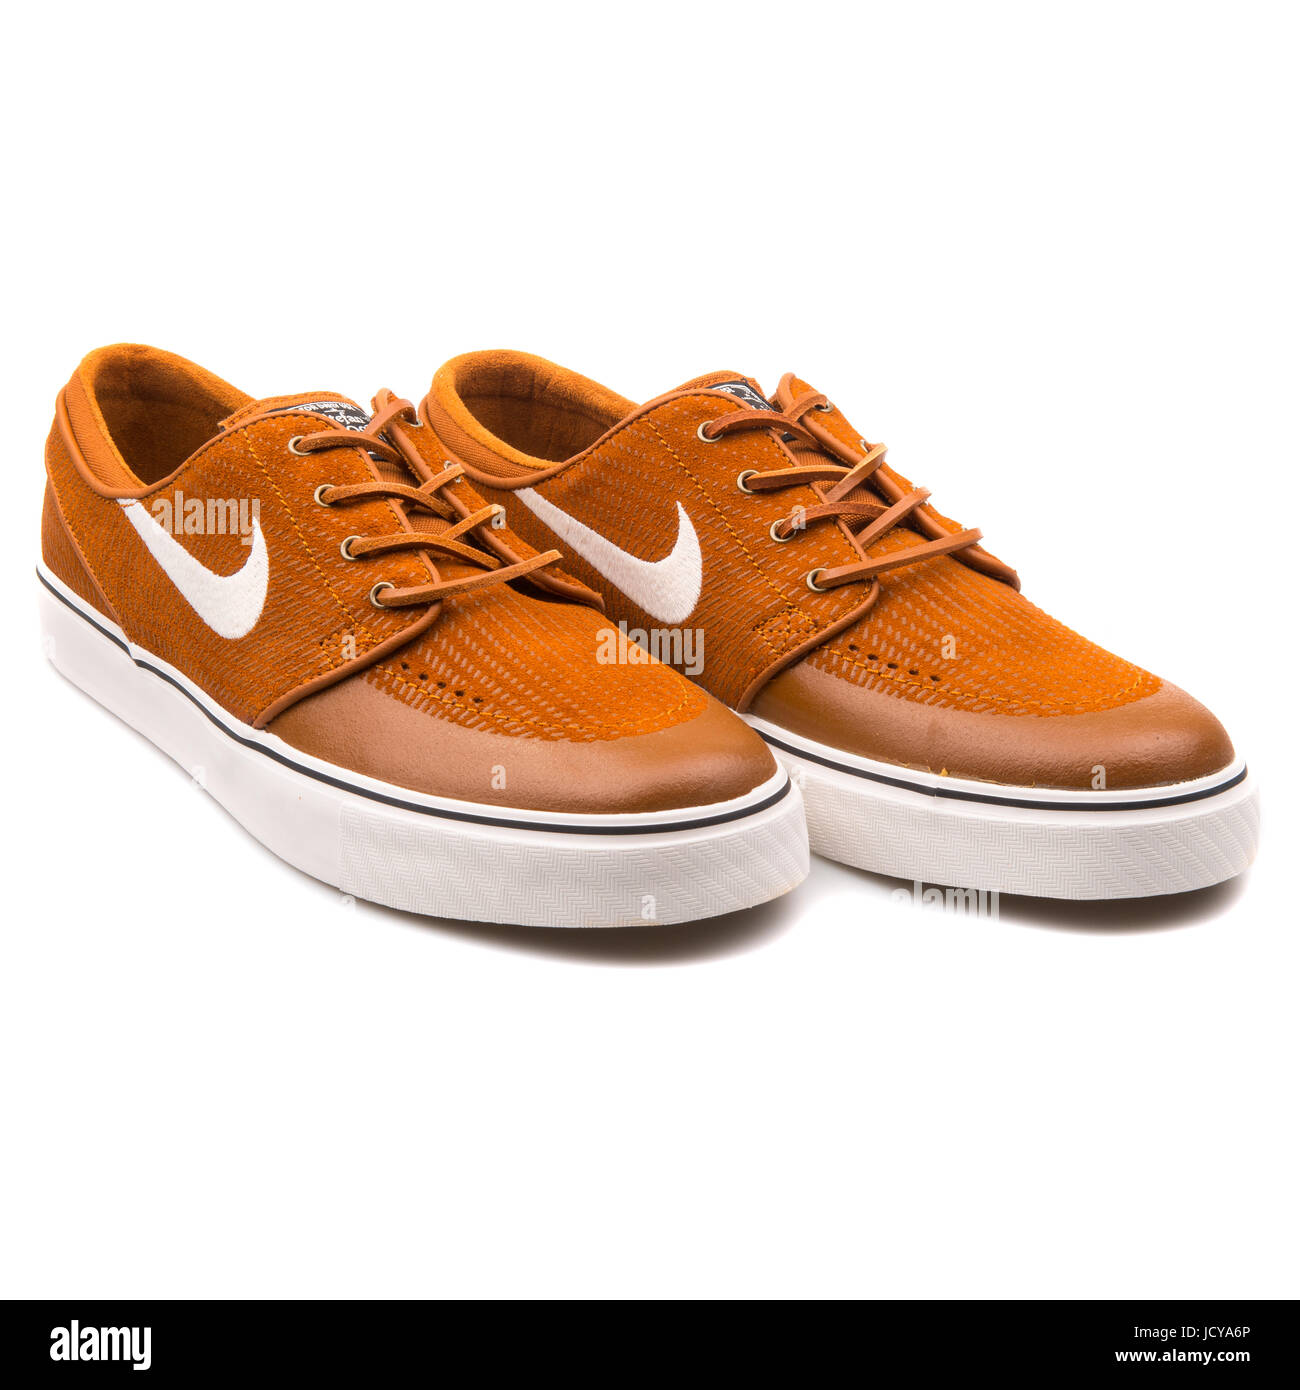 Stefan Janoski Nike Zoom PR SE Hommes marron chaussures de skate -  631298-211 Photo Stock - Alamy